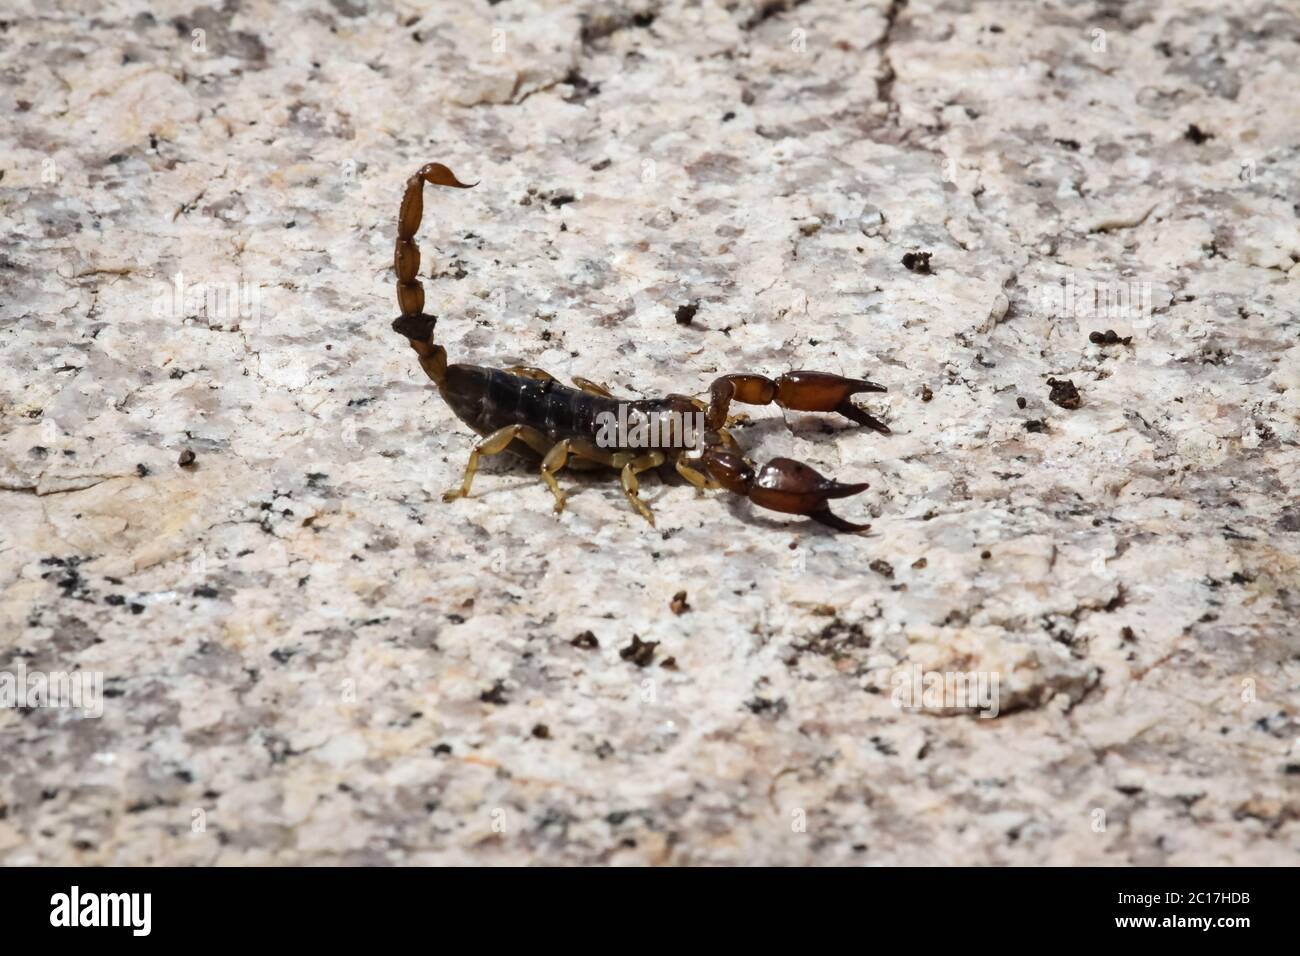 Close up of Black rock scorpion, Queensland Australia Stock Photo